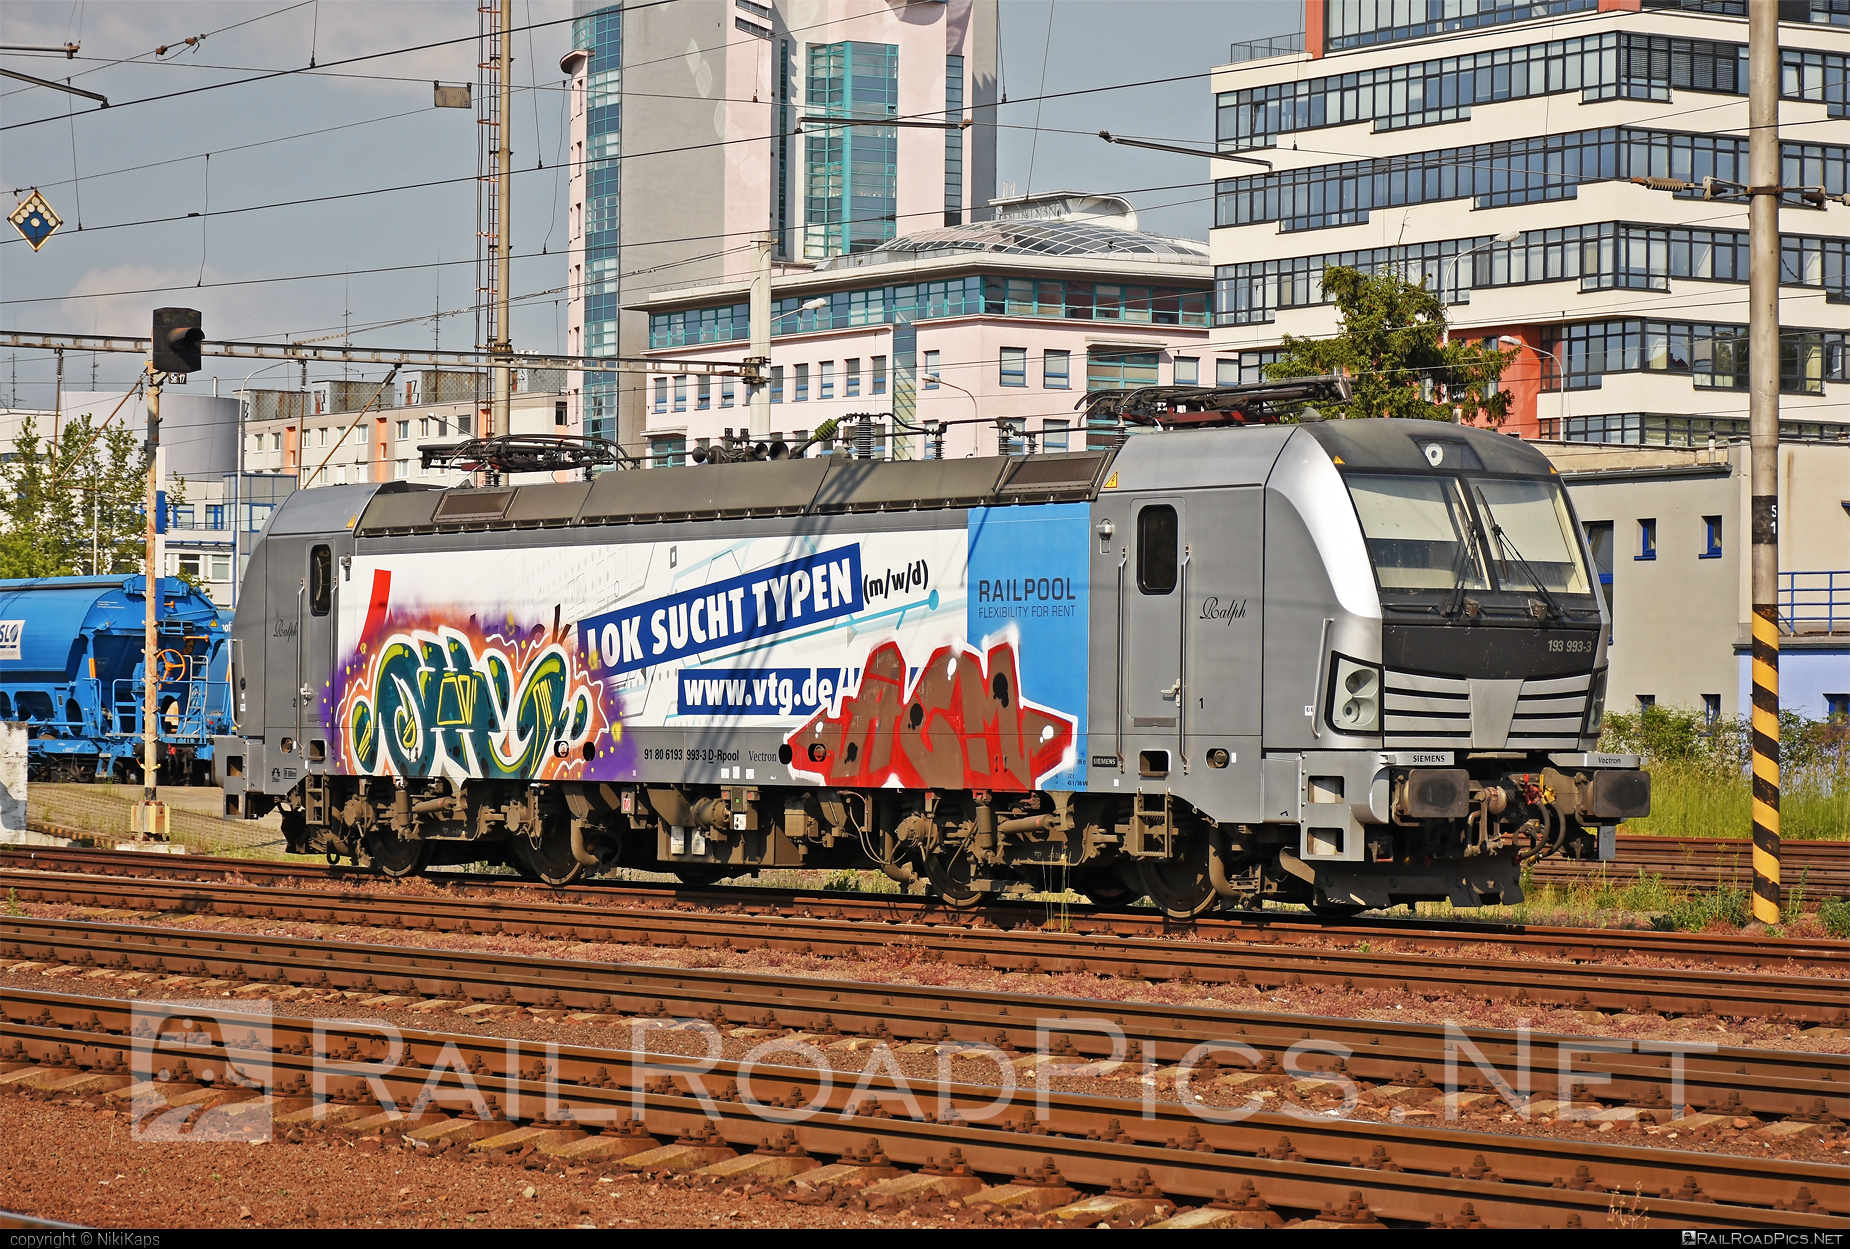 Siemens Vectron AC - 193 993-3 operated by Retrack GmbH & Co. KG #graffiti #railpool #railpoolgmbh #retrack #retrackgmbh #siemens #siemensVectron #siemensVectronAC #vectron #vectronAC